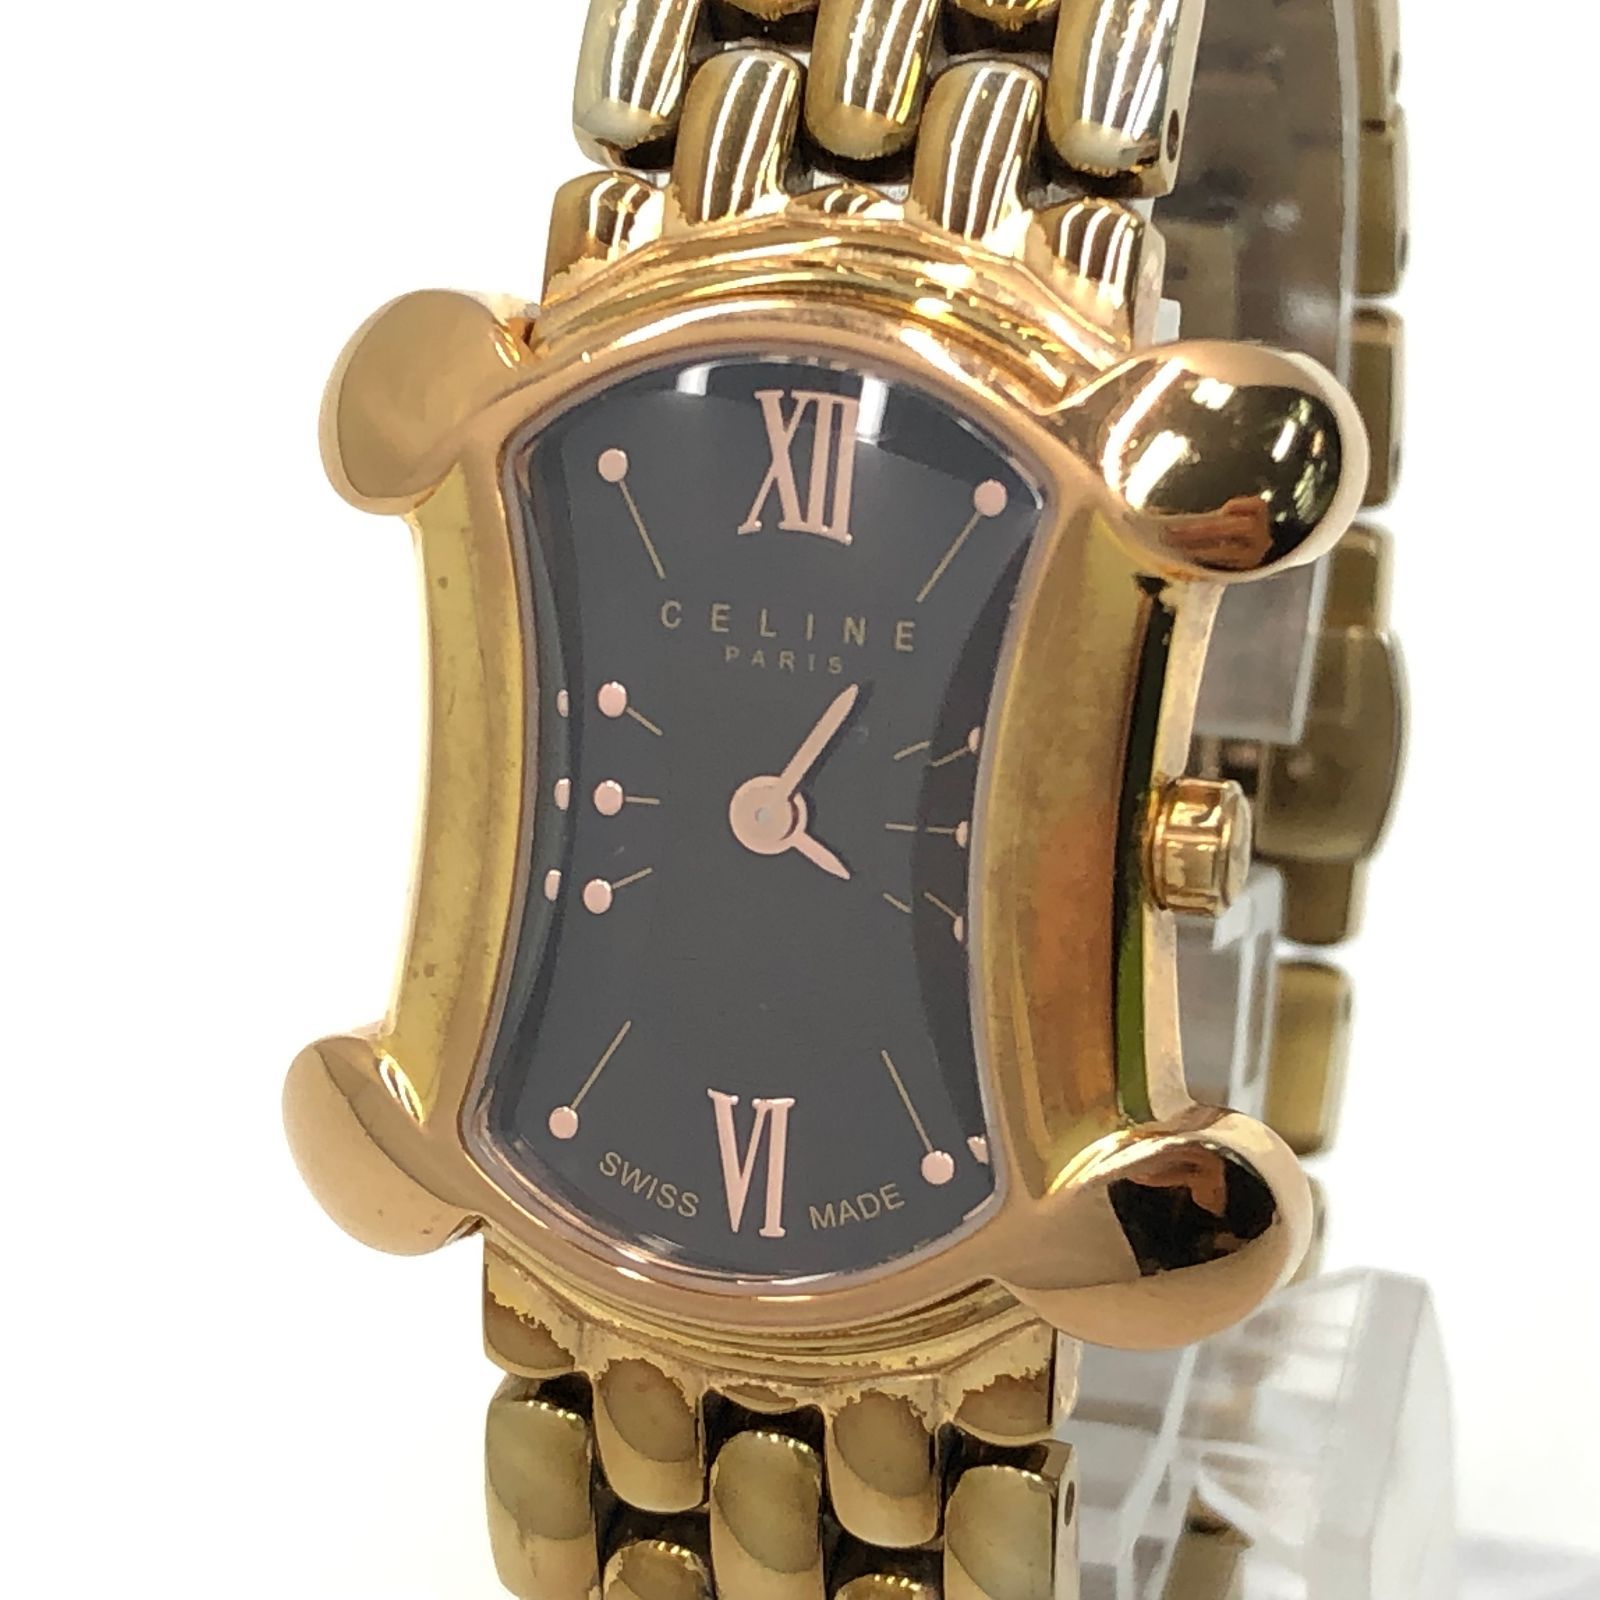 CELINE セリーヌ マカダム 30M/100FT ブラゾン 腕時計 ピンクゴールド